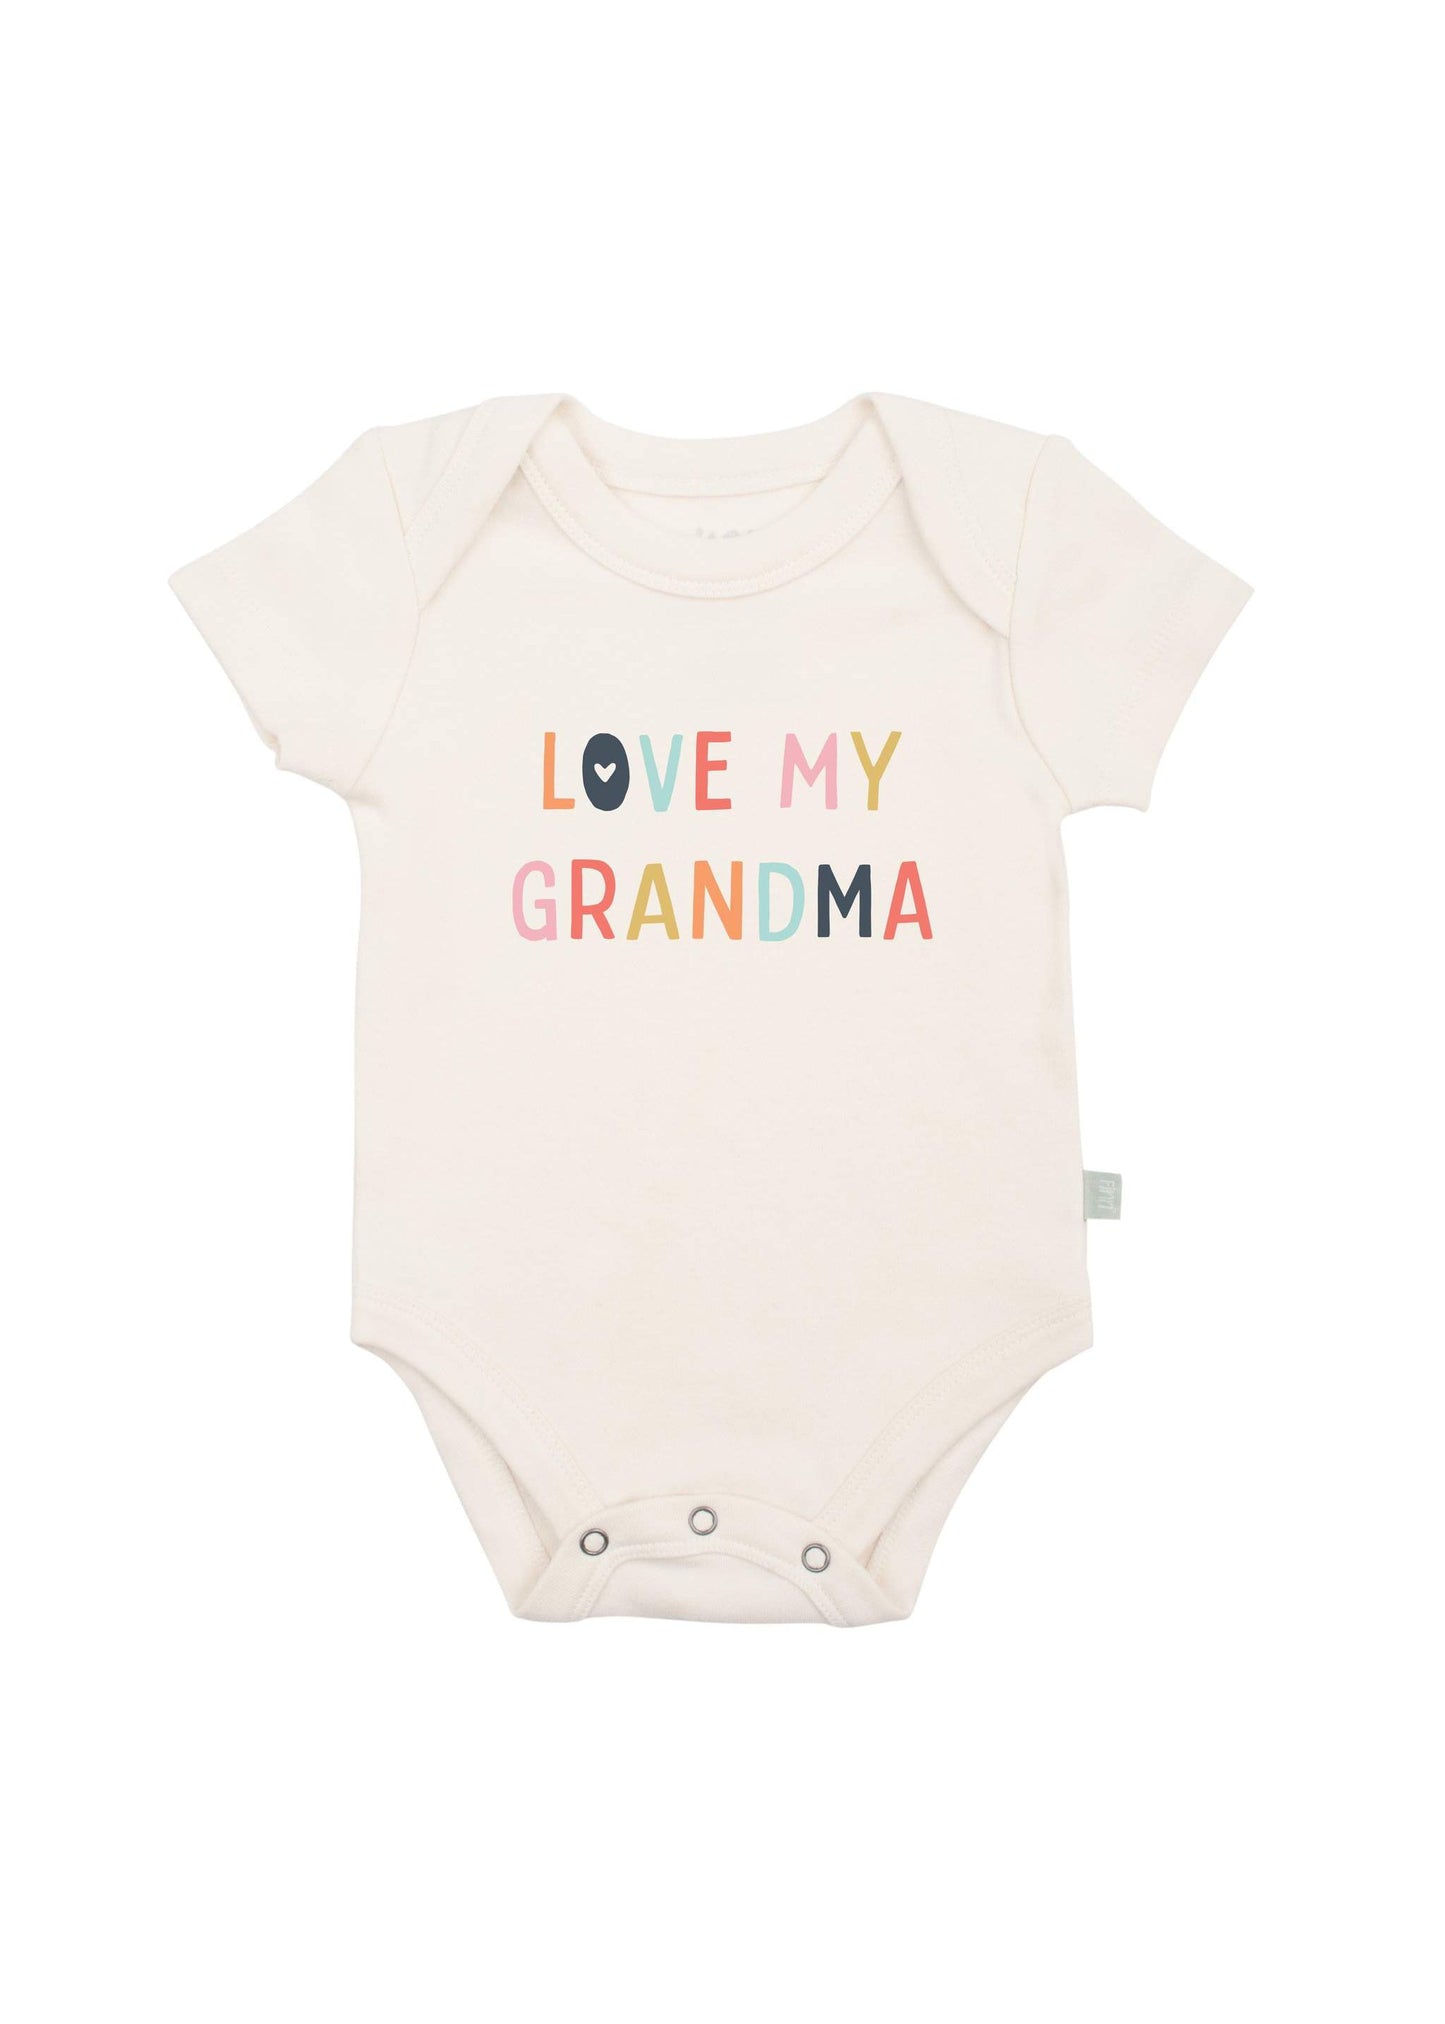 Love Grandma Graphic Onesie - FINAL SALE Girls